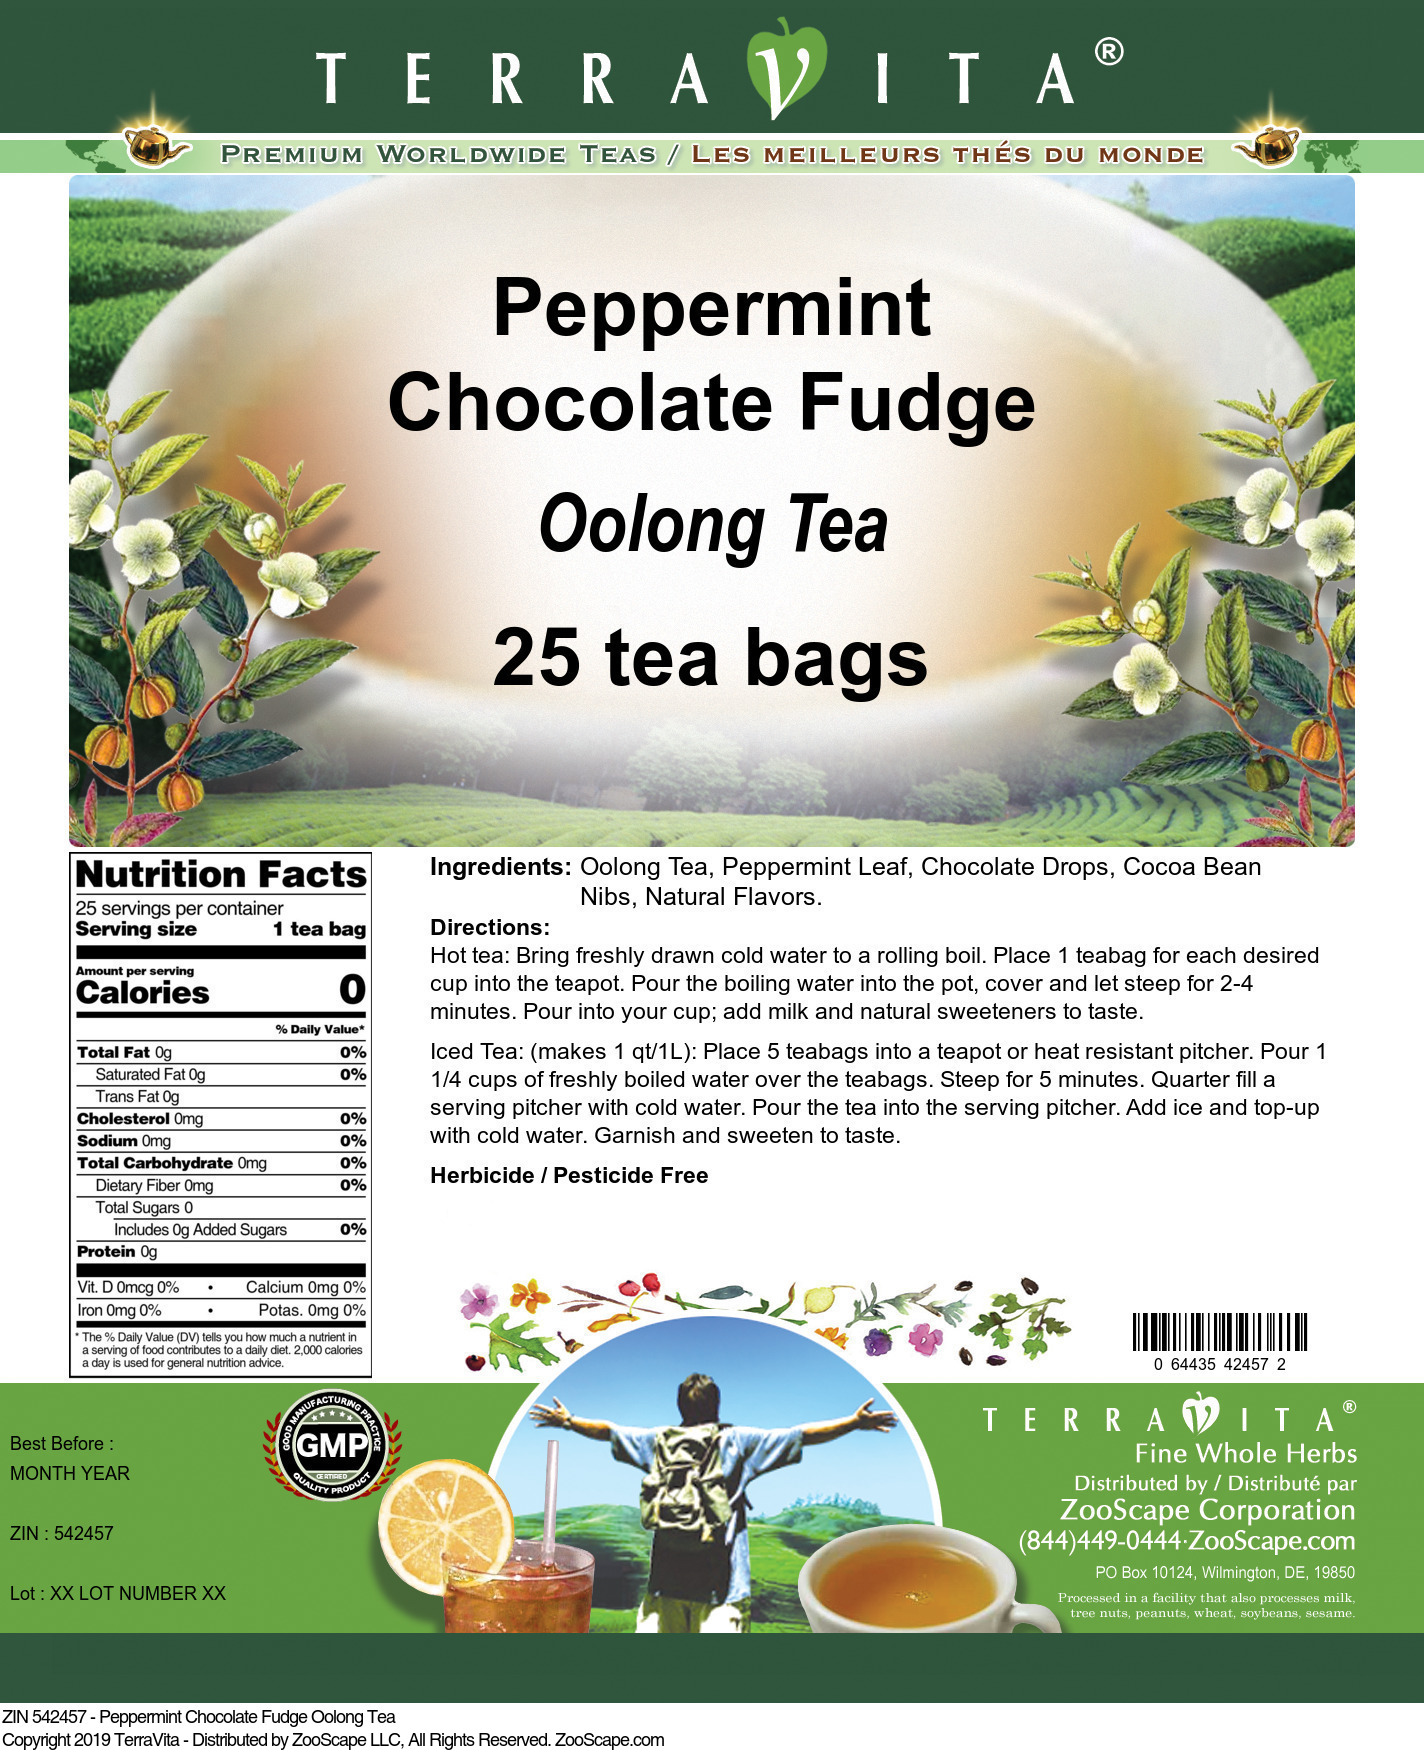 Peppermint Chocolate Fudge Oolong Tea - Label